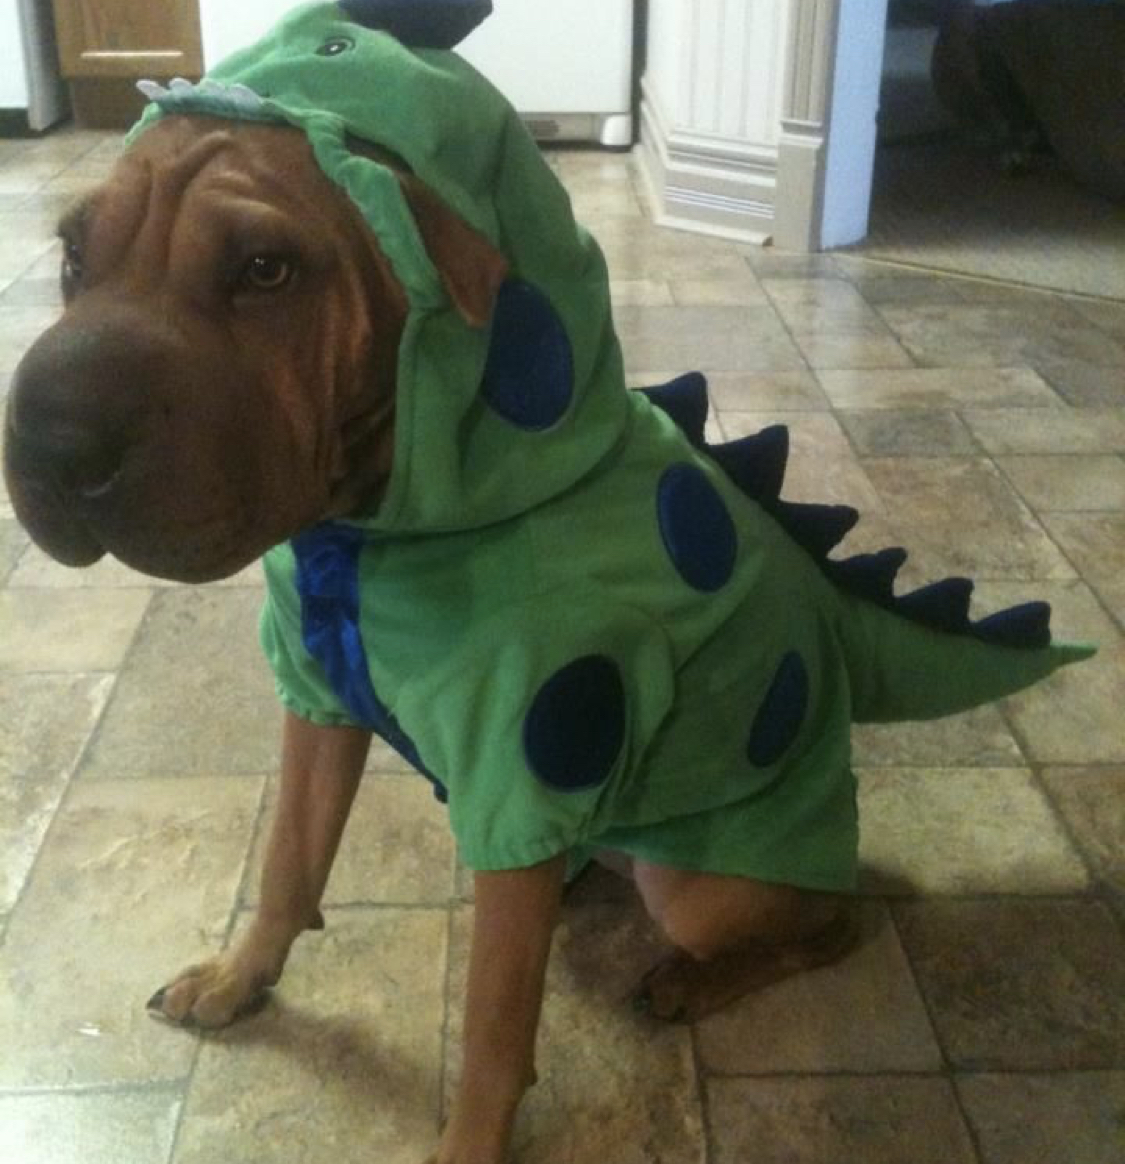 Shar Pei in dinosaur costume